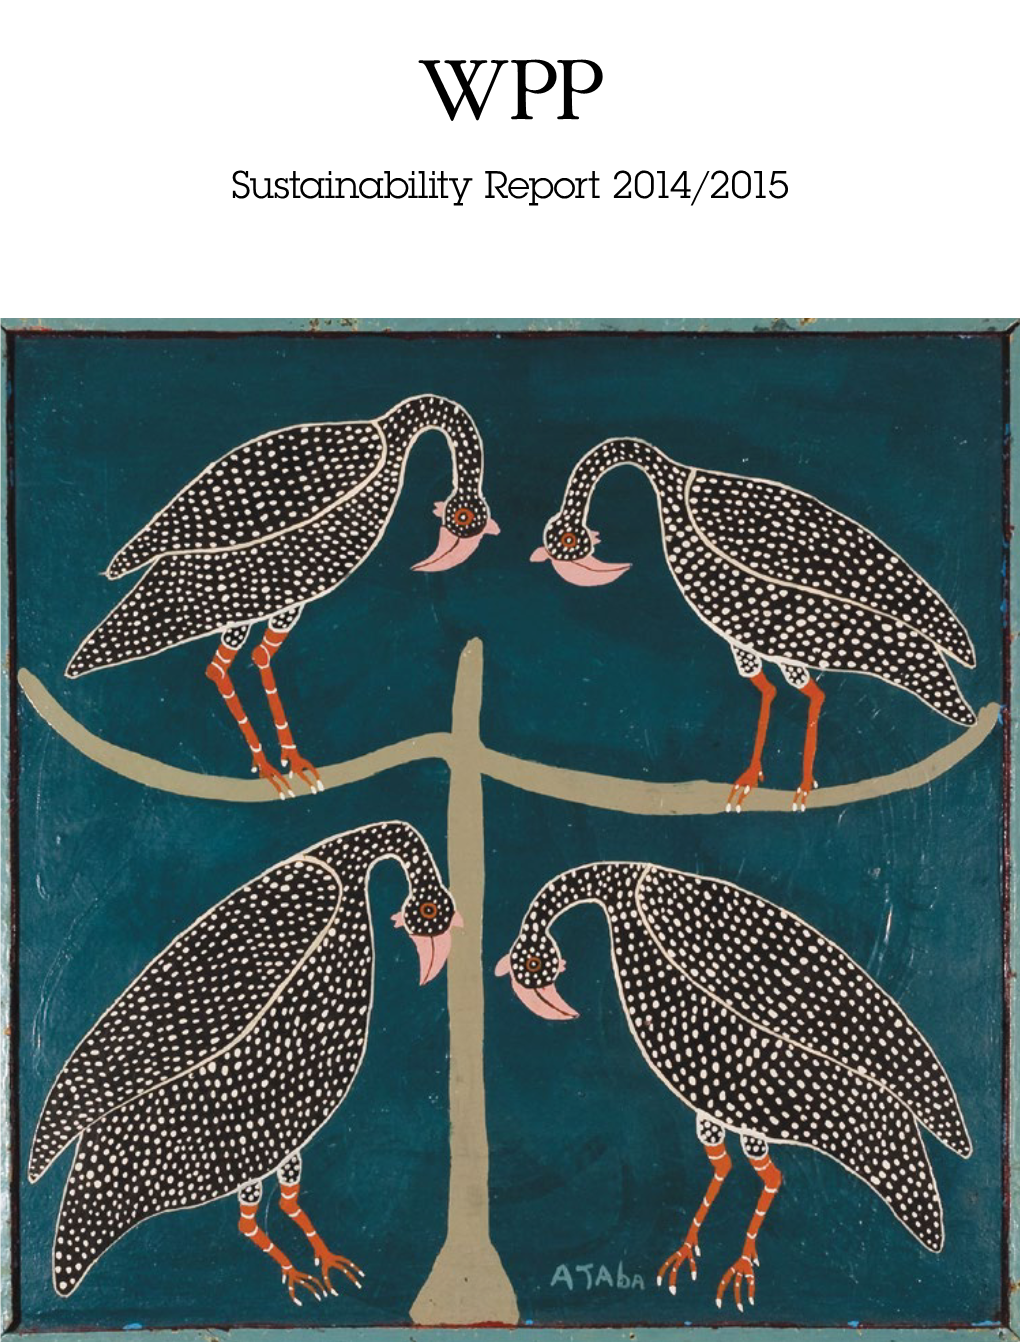 WPP Sustainability Report 2014-2015 PDF 4.7MB